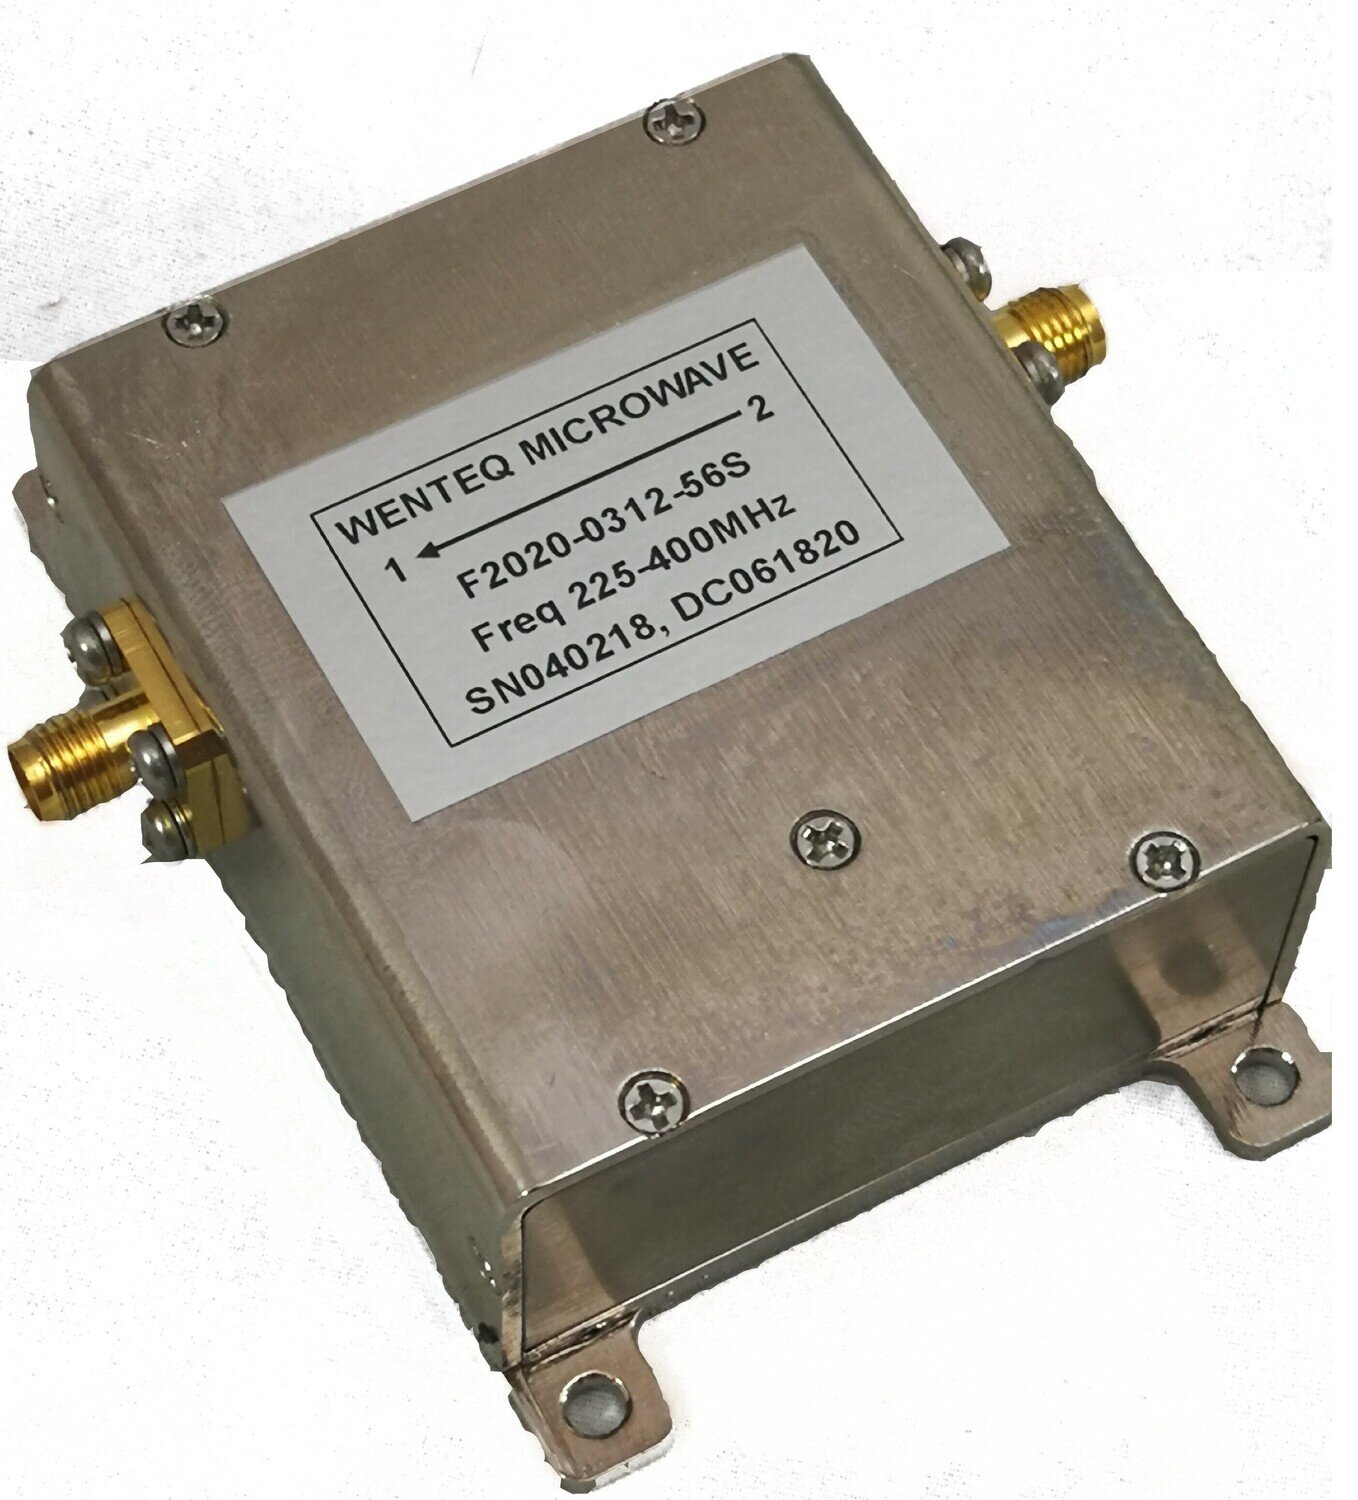 Broadband Coaxial Isolator
F2020-0312-56 S